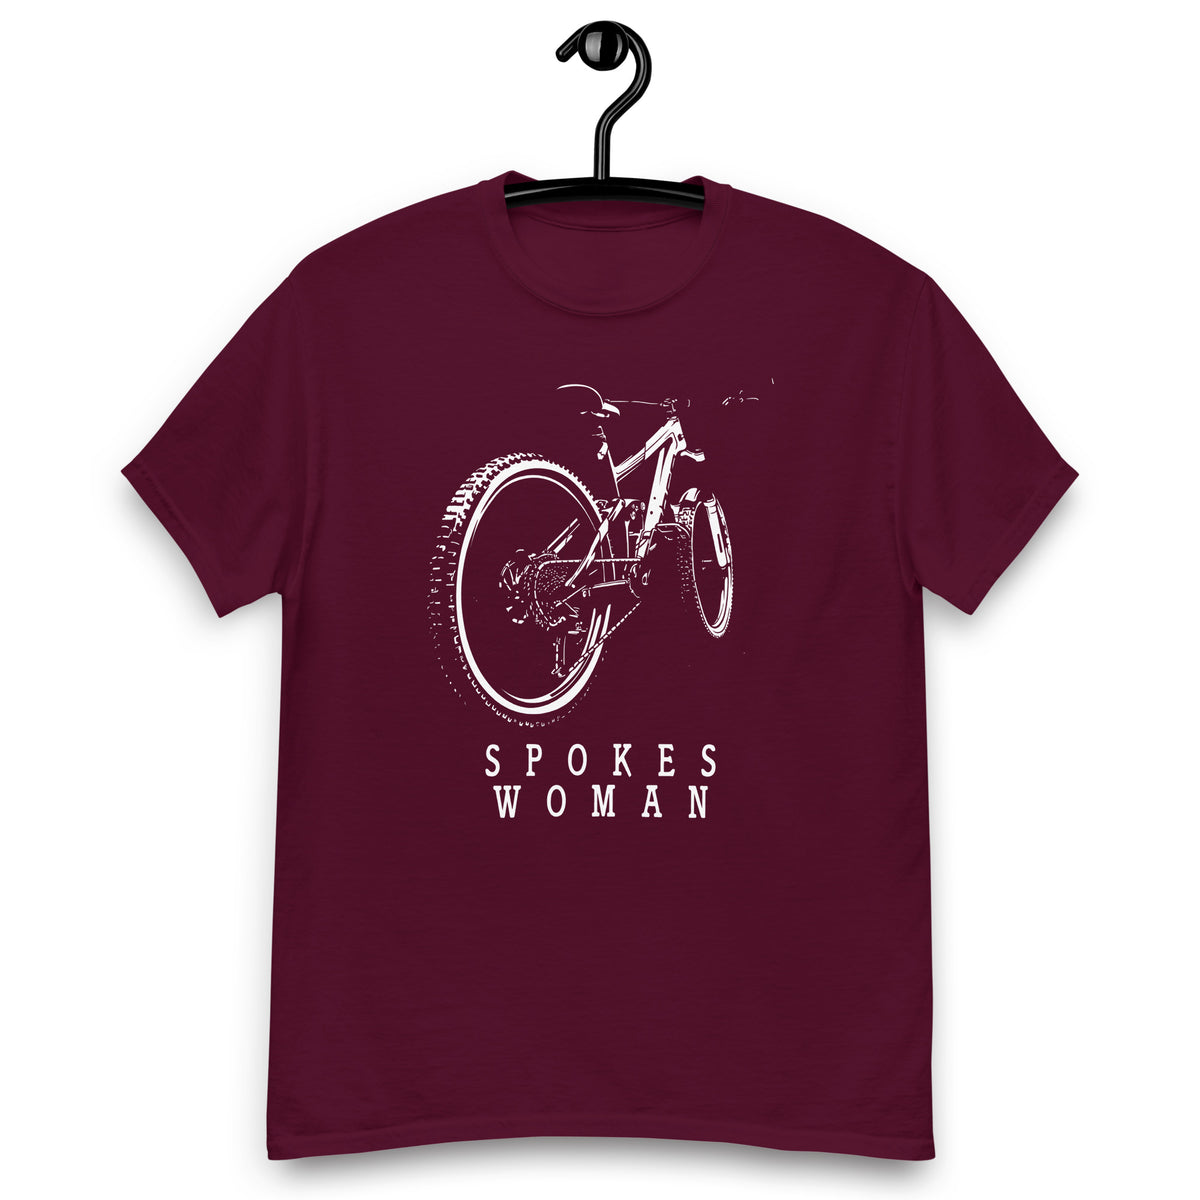 Fahrrad Shirts " Spokes Moman" Variante 2